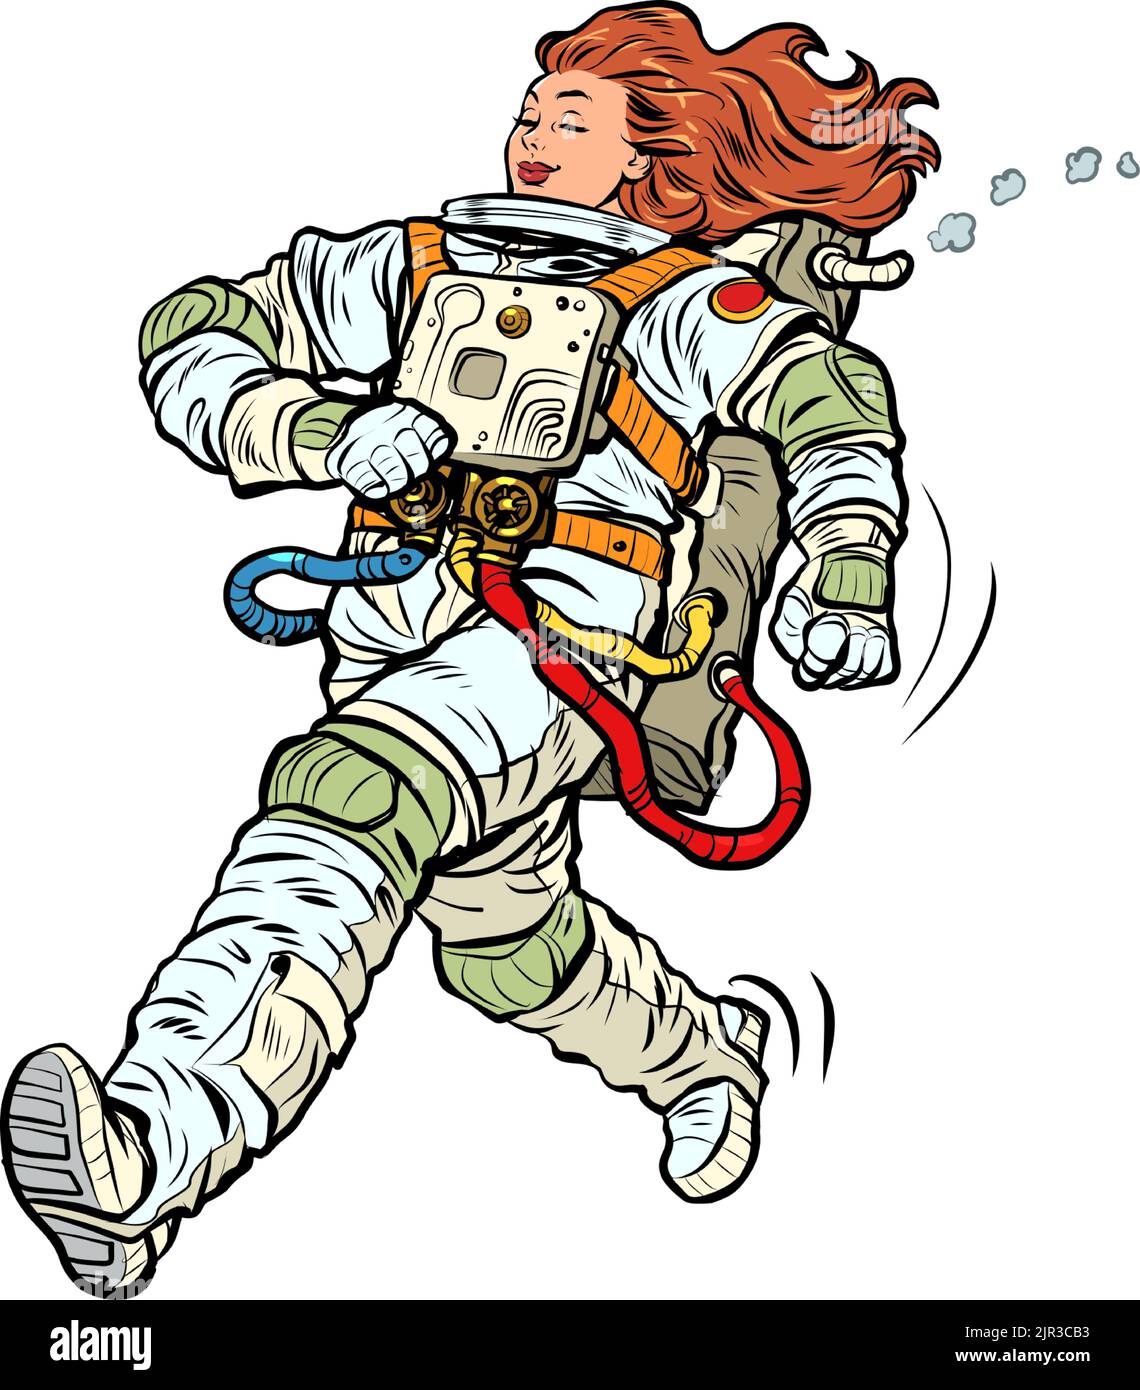 Astronaut woman winner proudly walks forward. Astronaut space suit. Pop art retro vector illustration 50s 60s style kitsch vintage Stock Vector